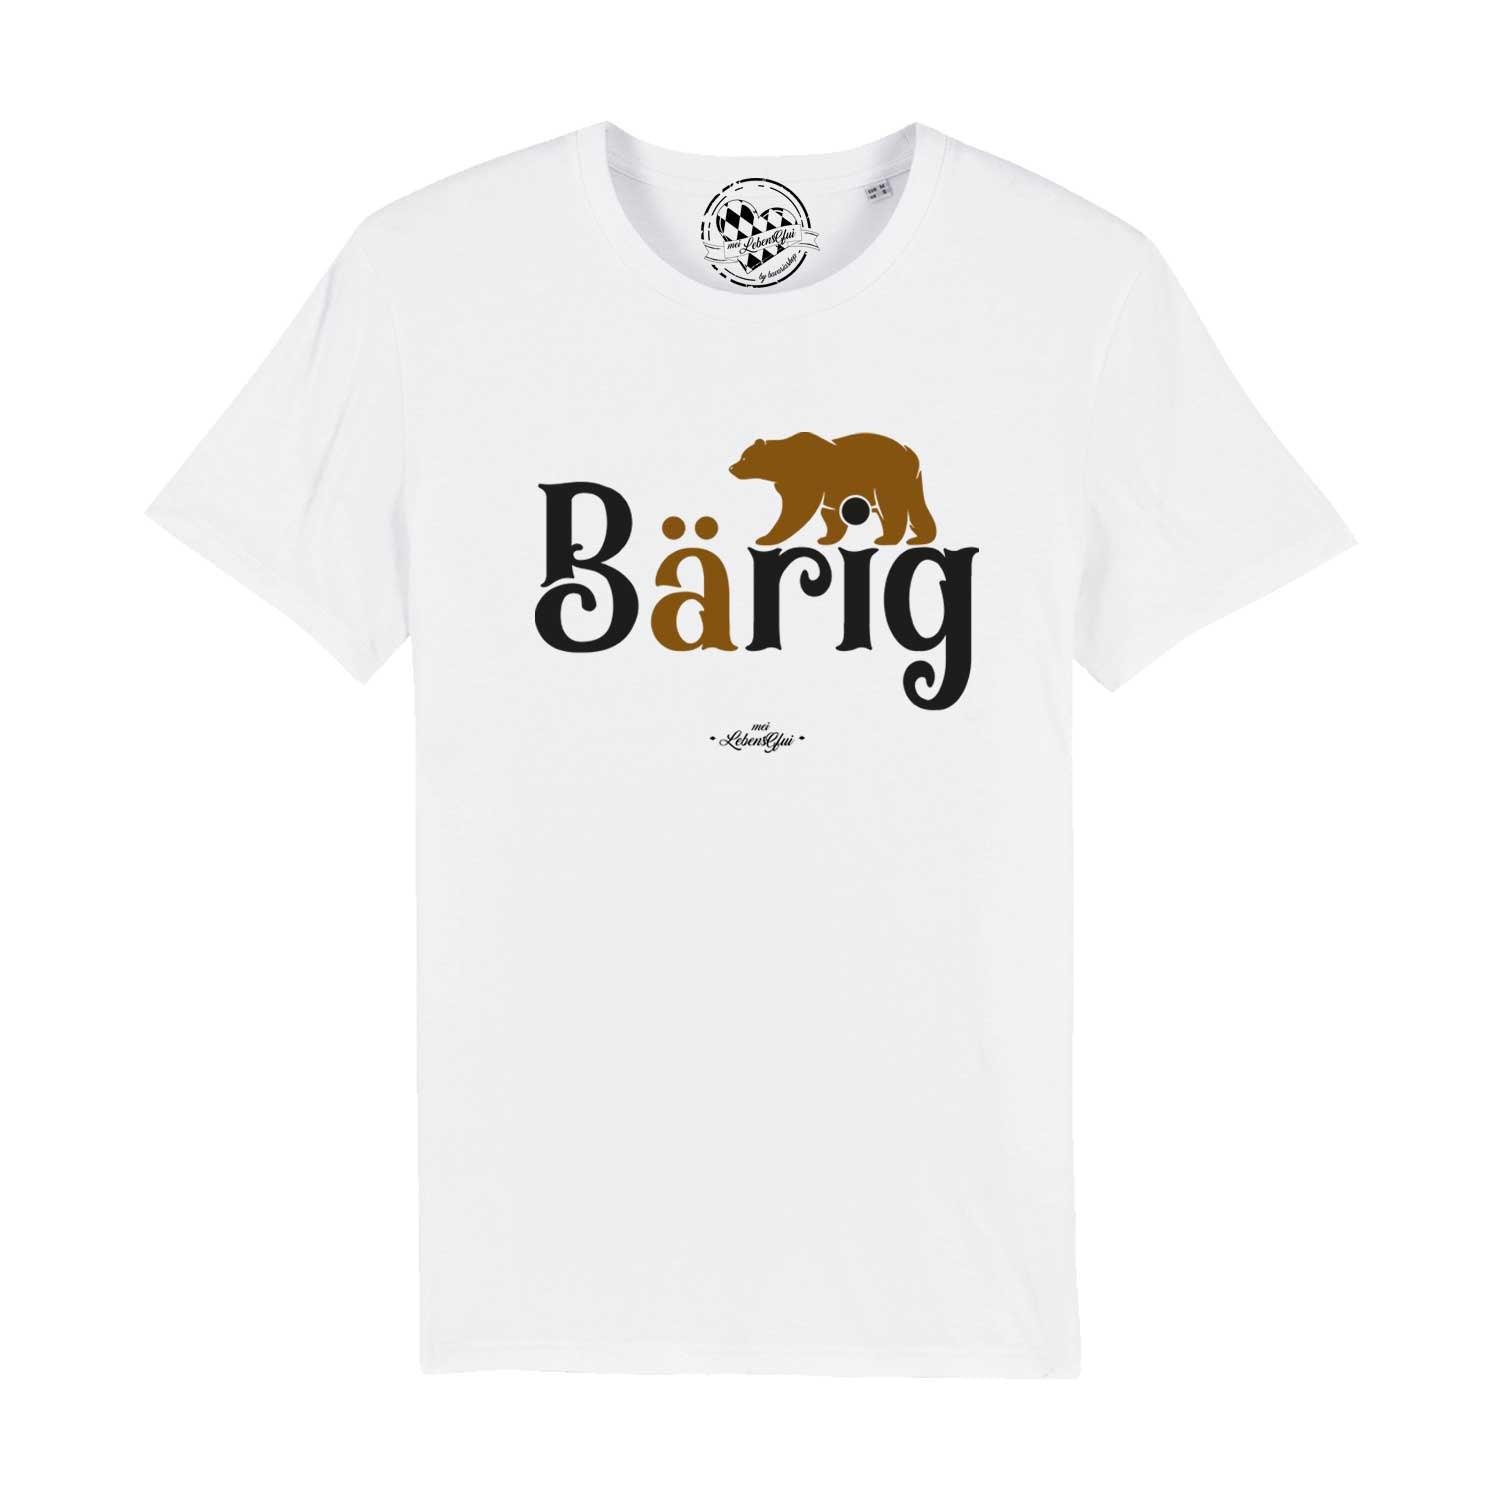 Herren T-Shirt "Bärig" - bavariashop - mei LebensGfui